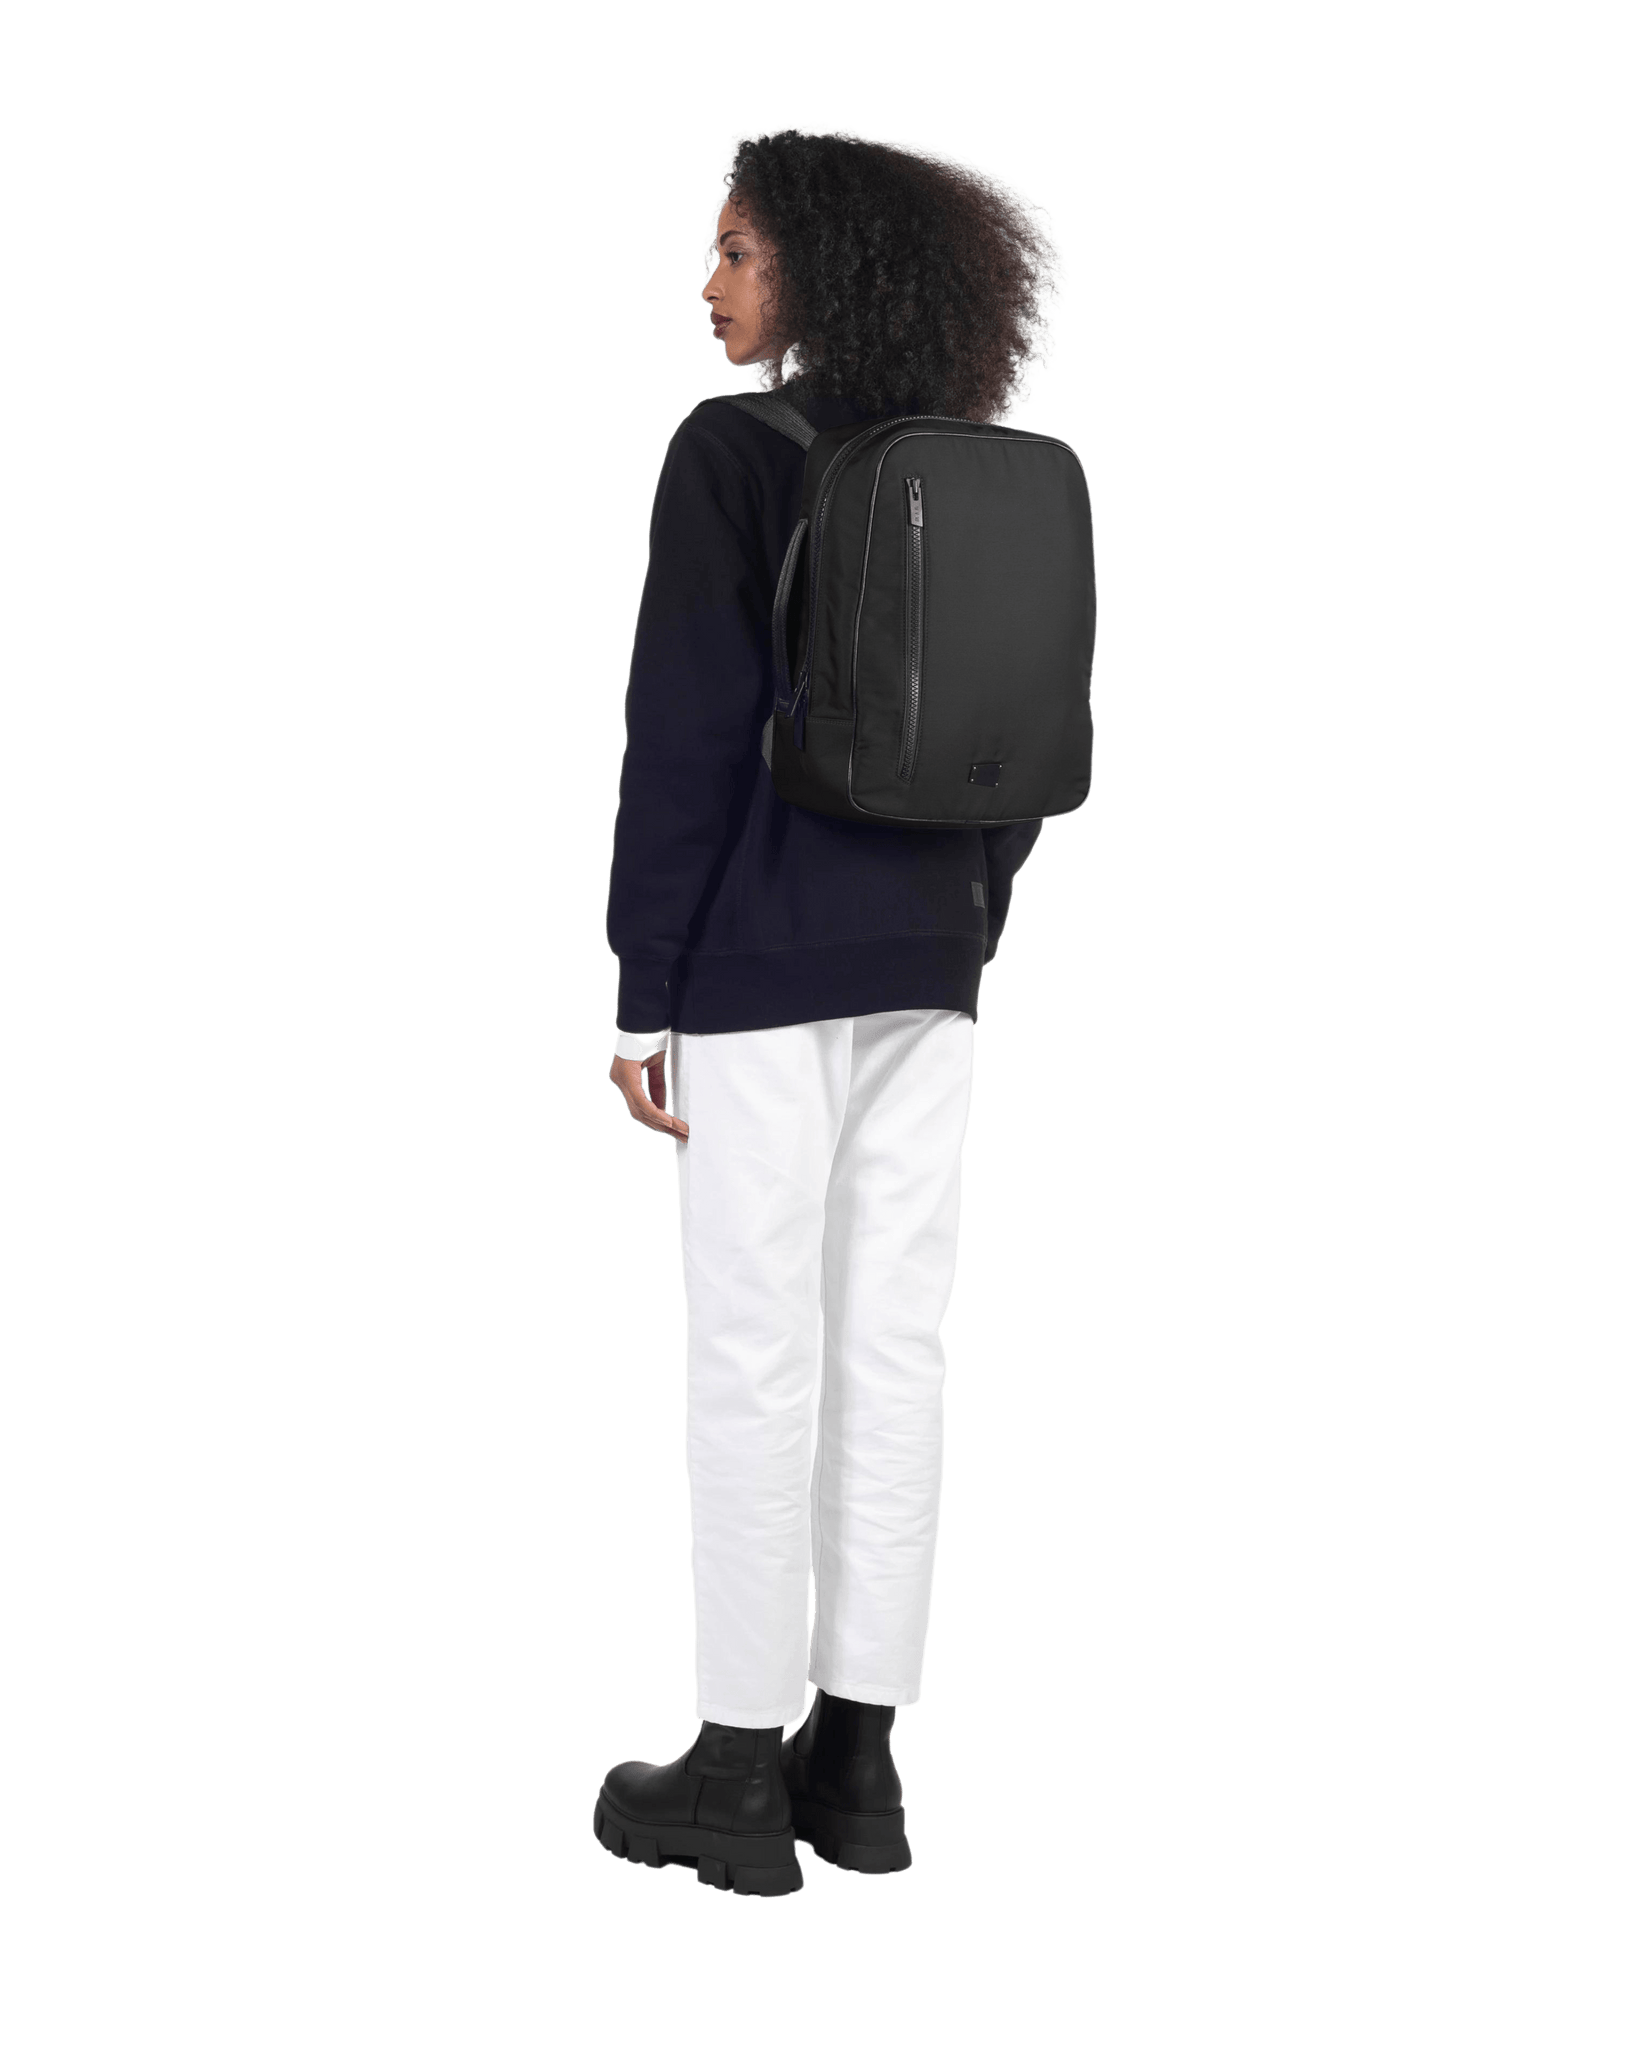 CHE Backpack